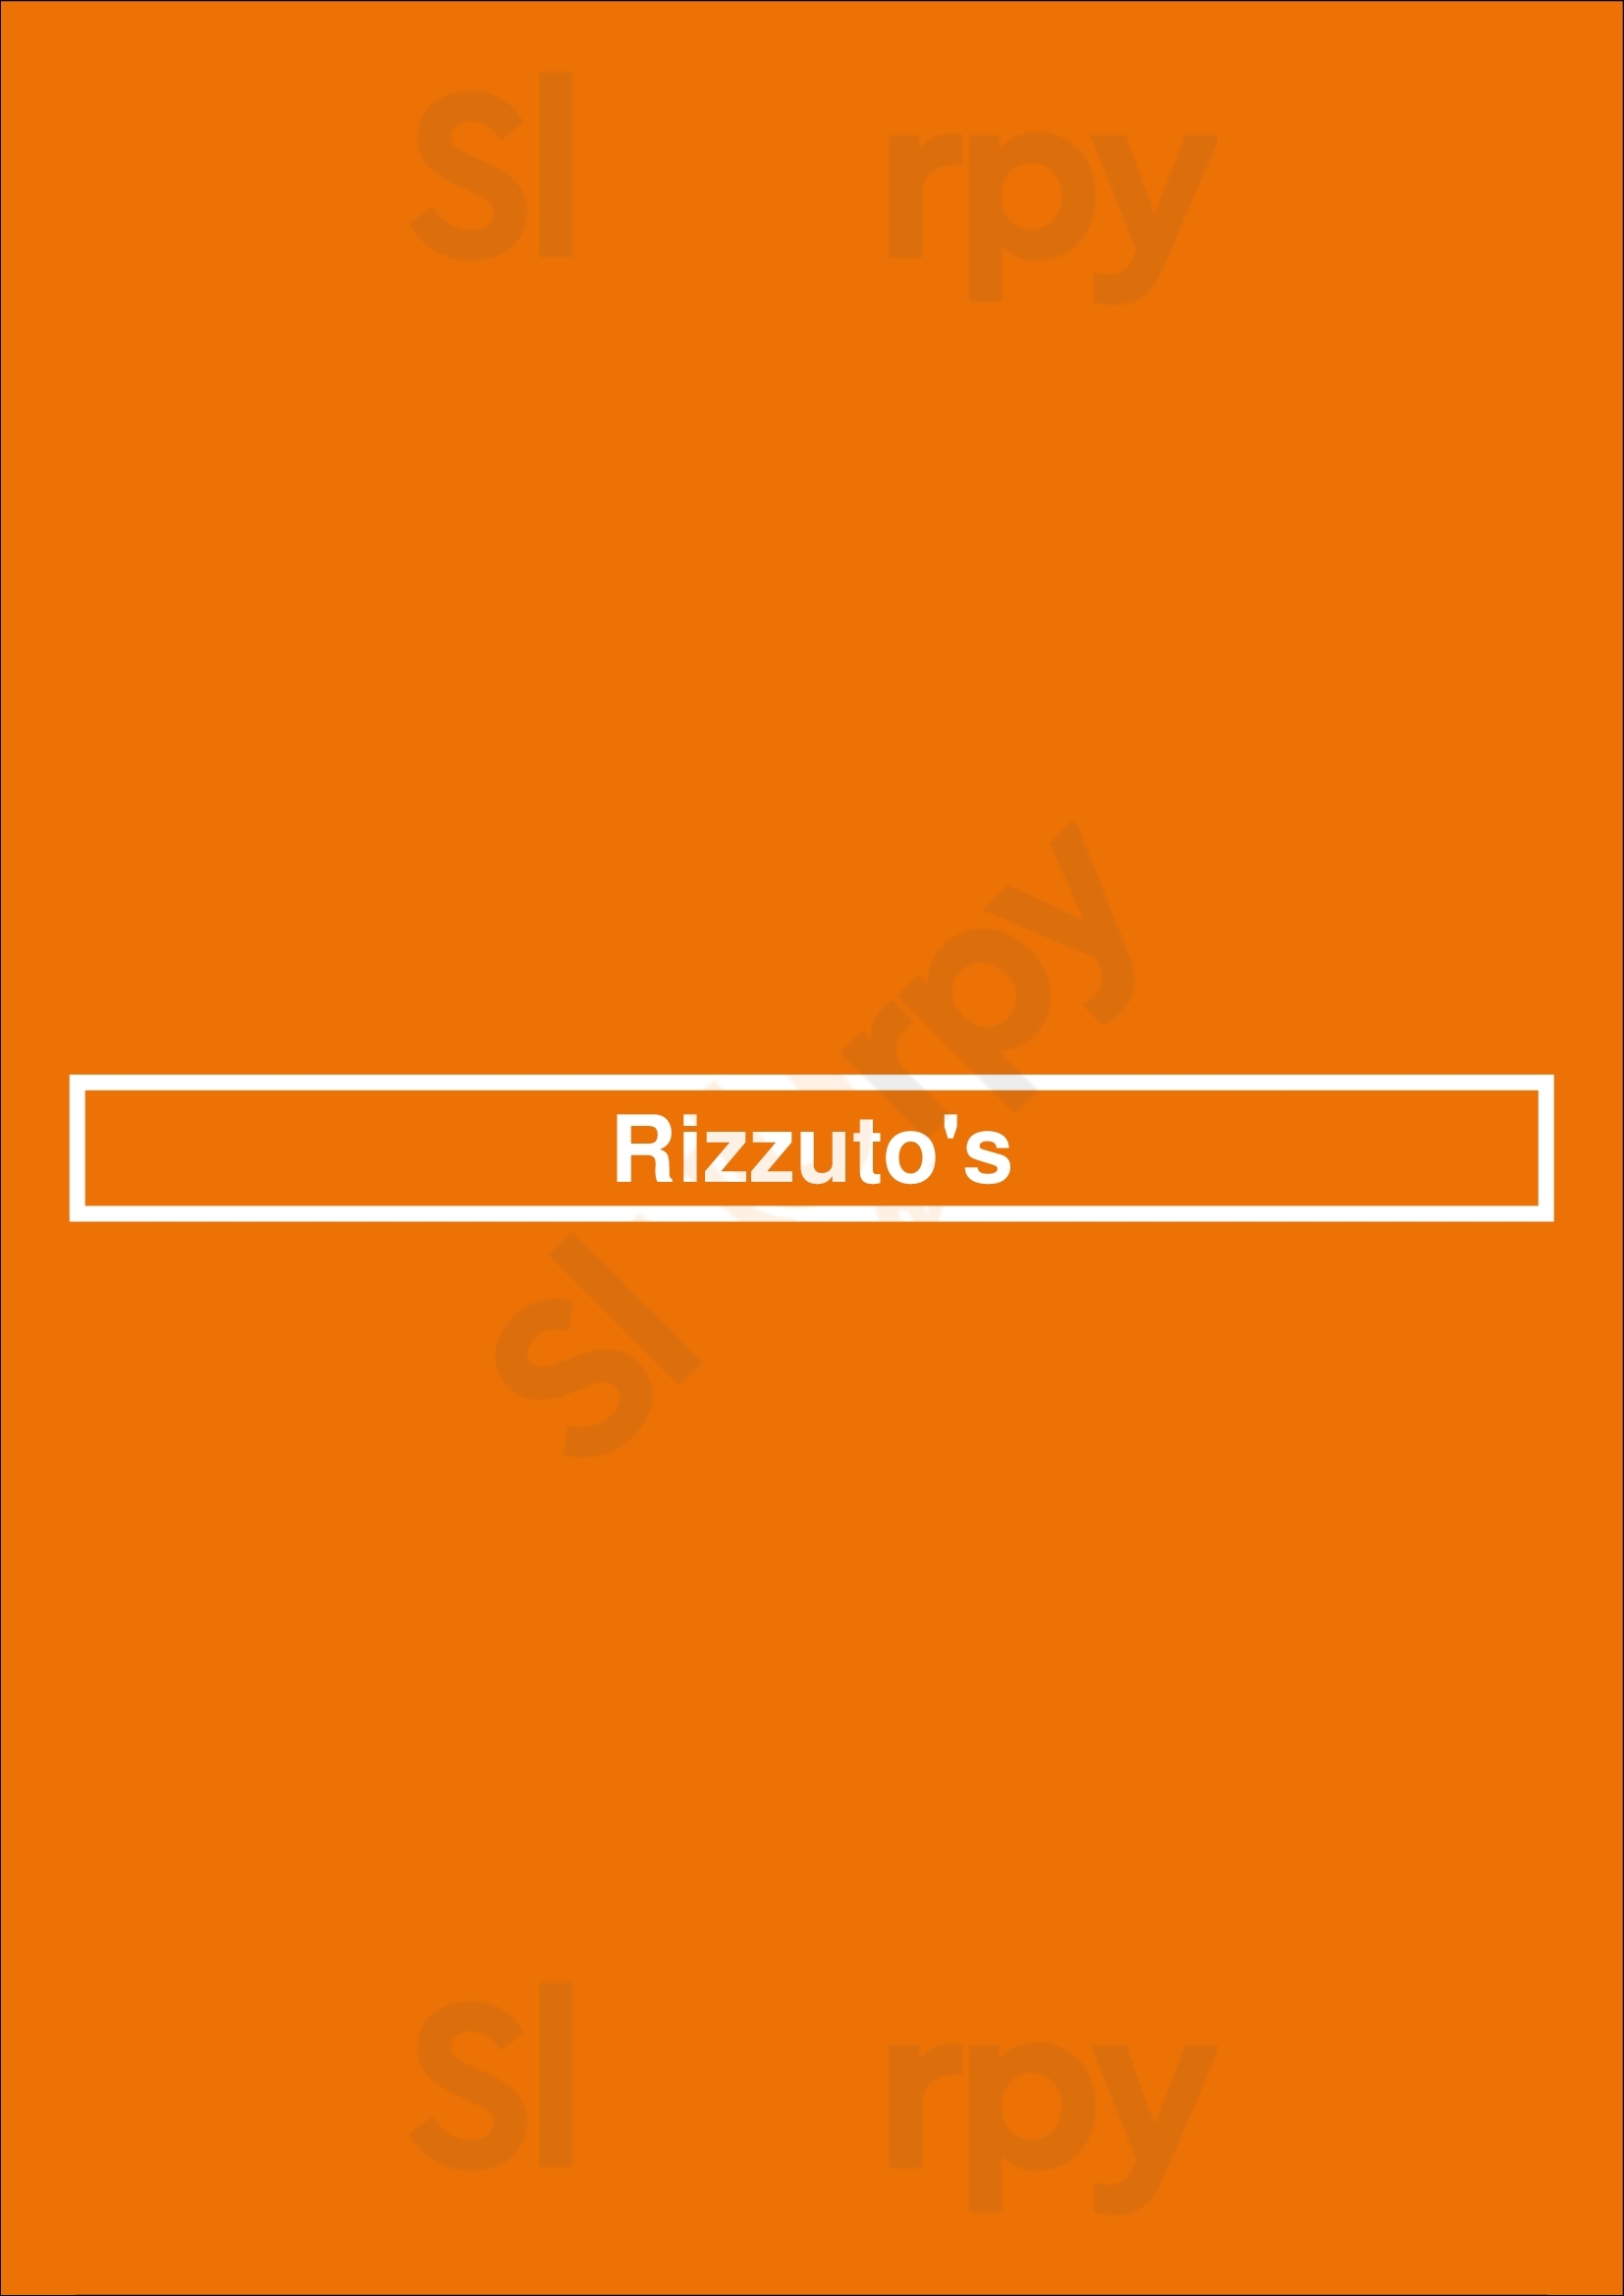 Rizzuto's New Orleans Menu - 1